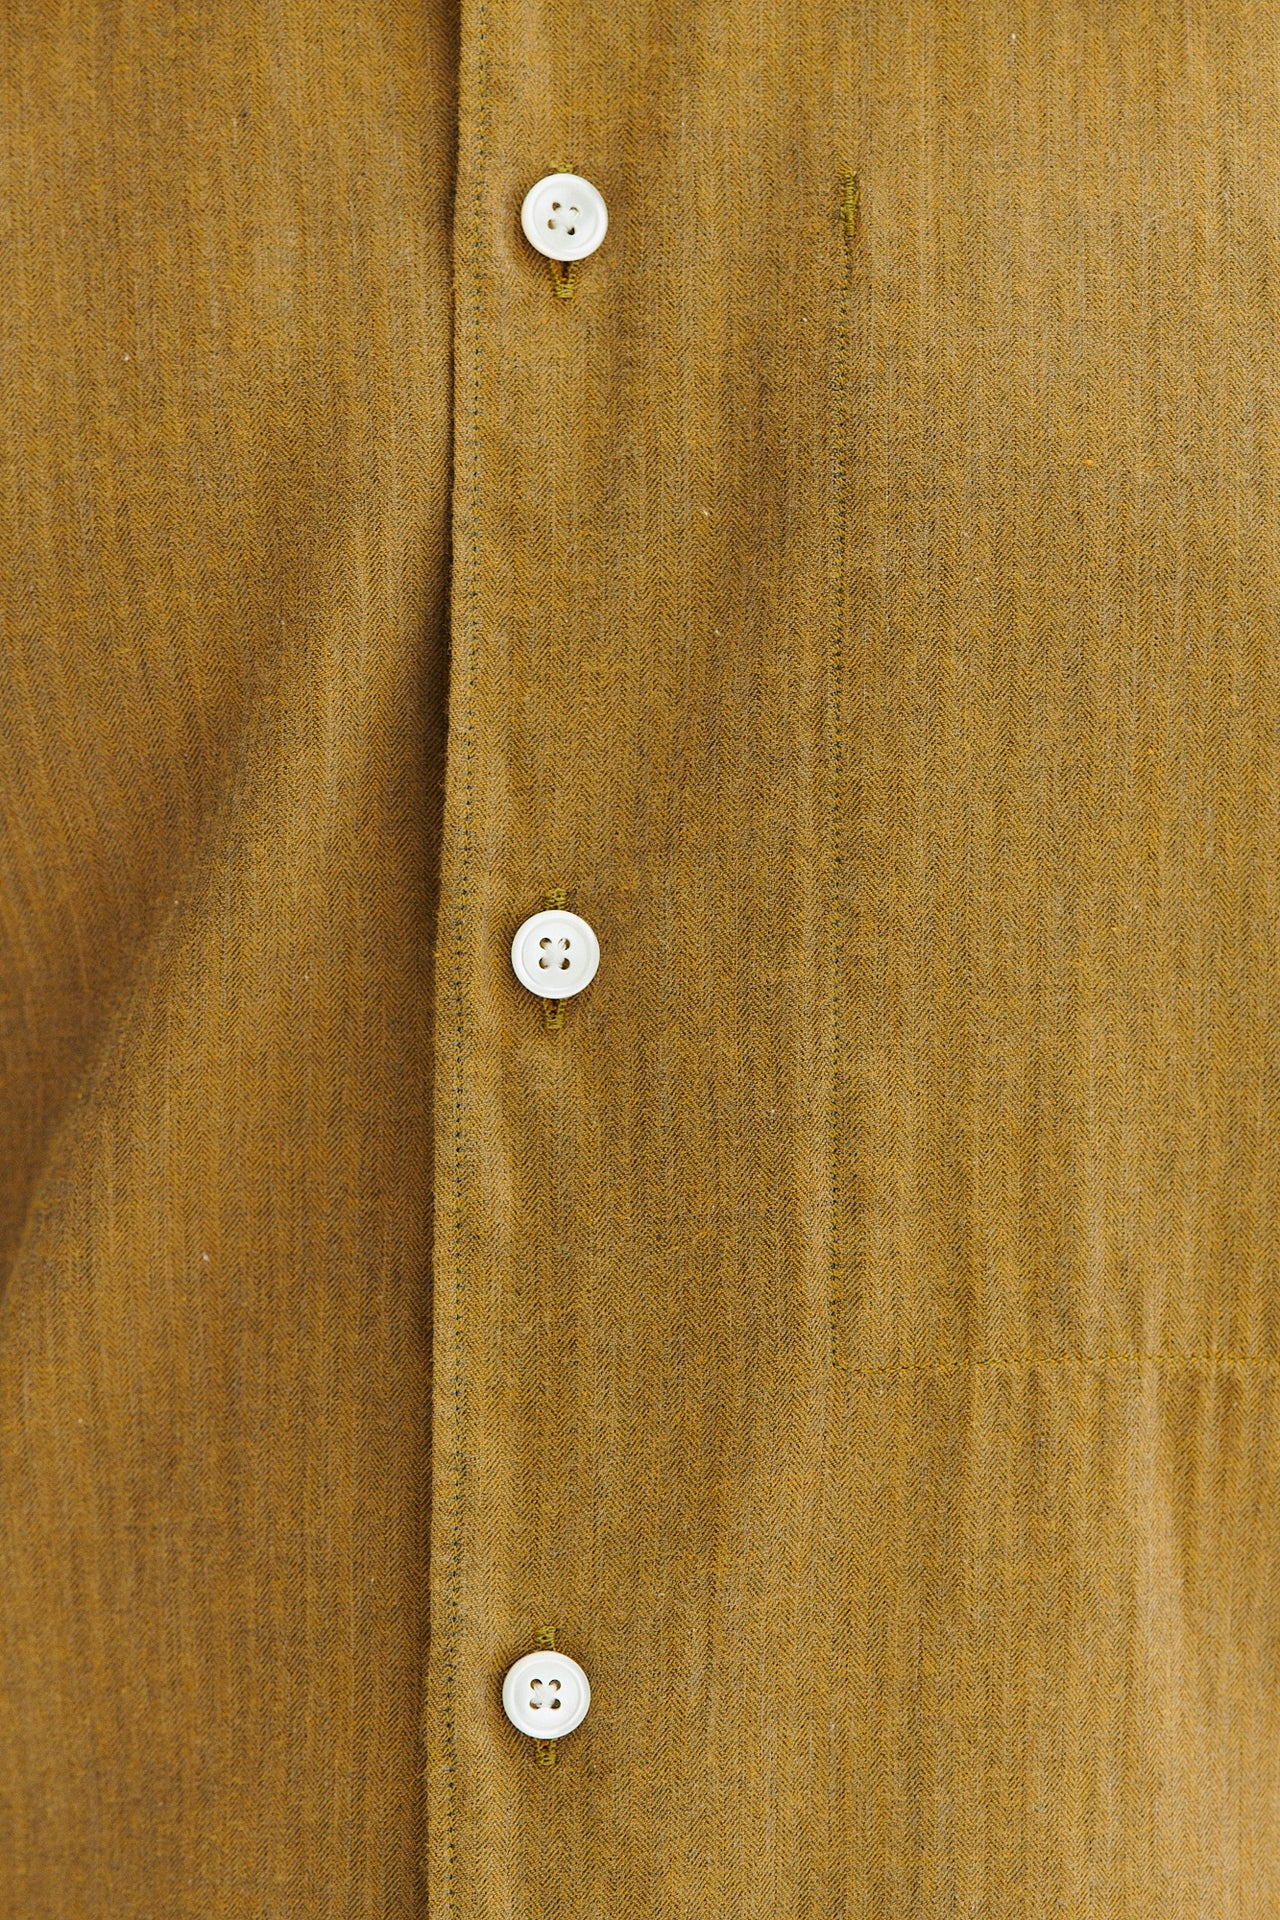 Feel Good Shirt in the Finest Ochre Yellow Fine Herringbone Soft Italian Giza 87 Cotton Flannel